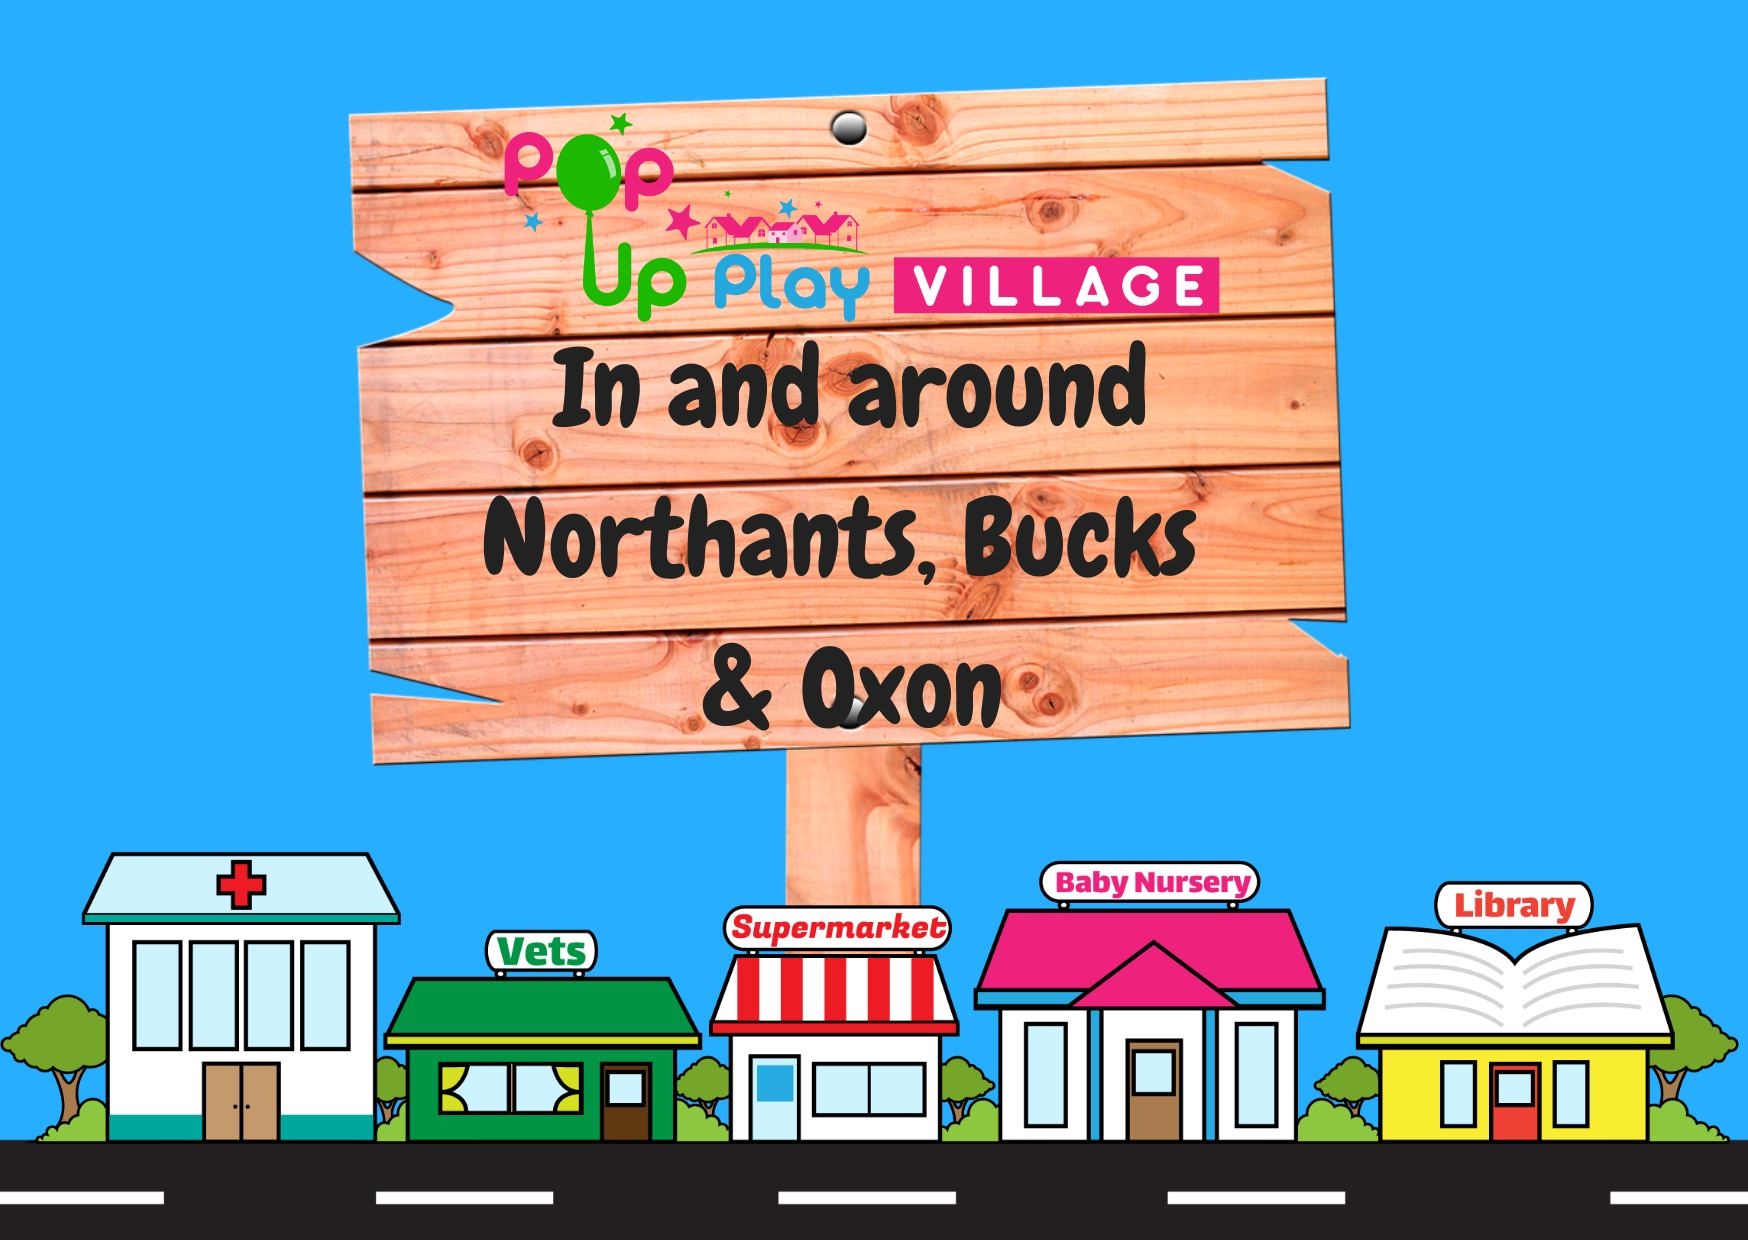 Pop Up Play Village in and around Northants, Bucks & Oxon's logo